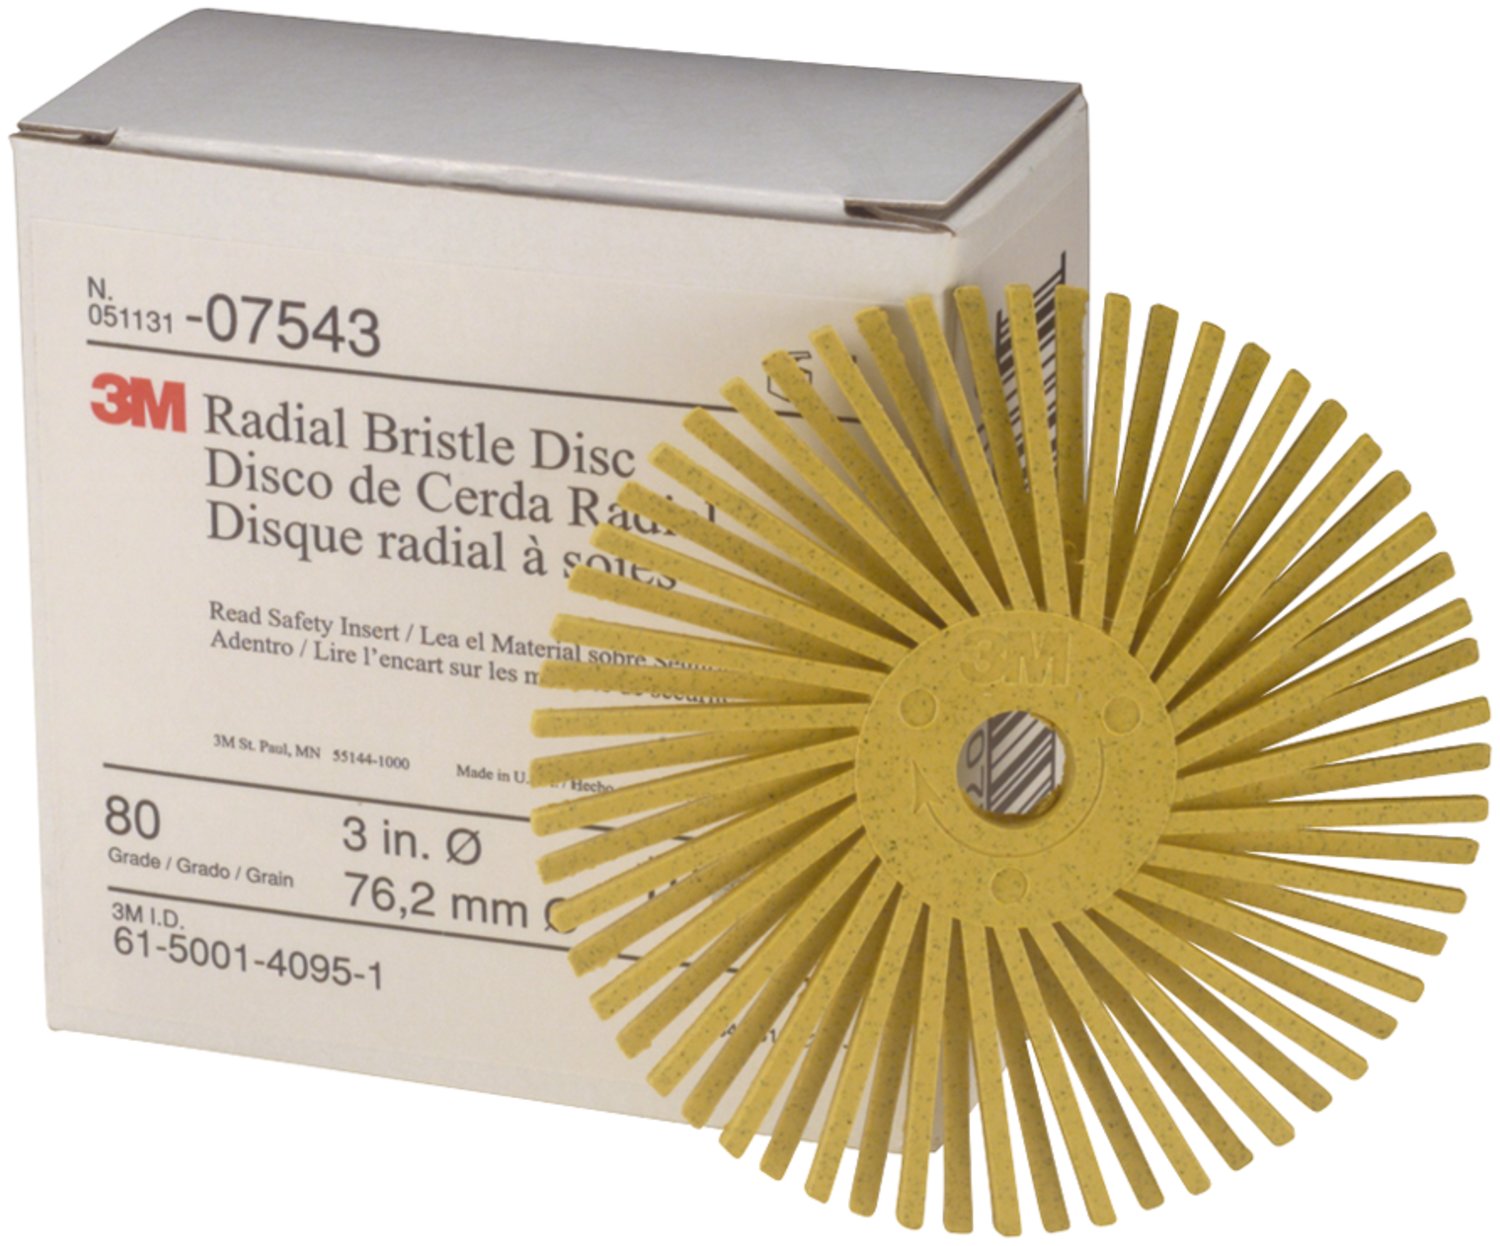 7100138193 - Scotch-Brite Radial Bristle Disc, RB-ZB, 80, 3 in x 3/8 in, 4
Cartons/Case